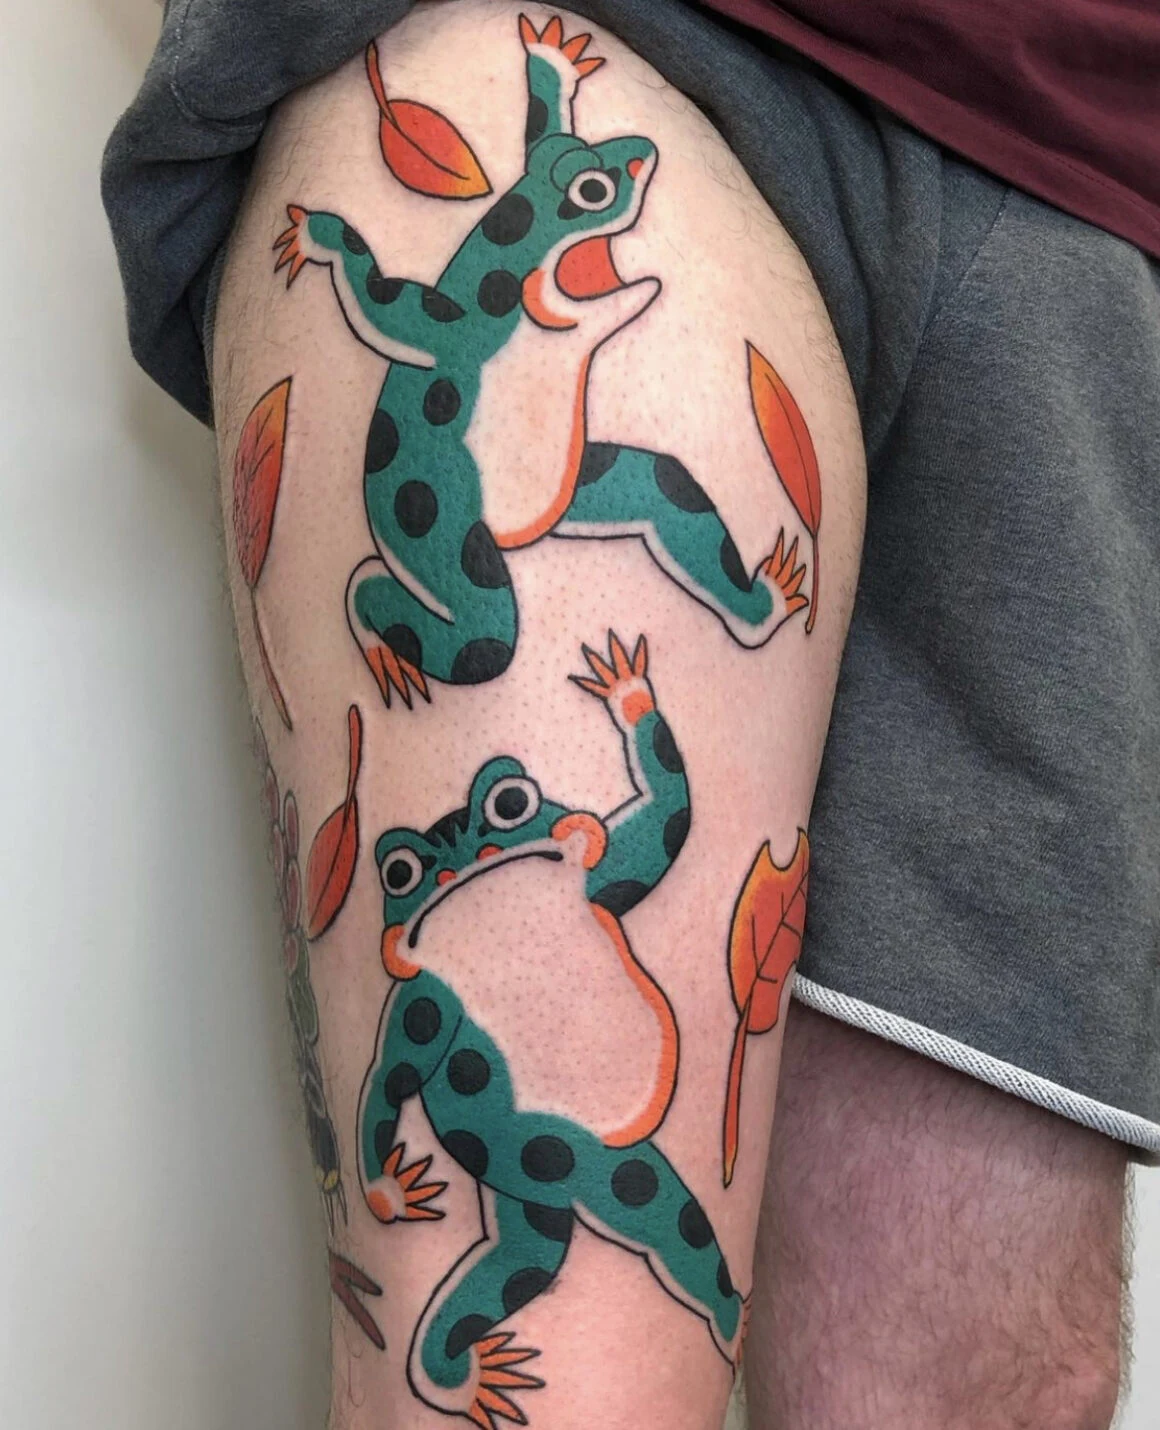 Tatuajes de ranas ideas y simbolismo